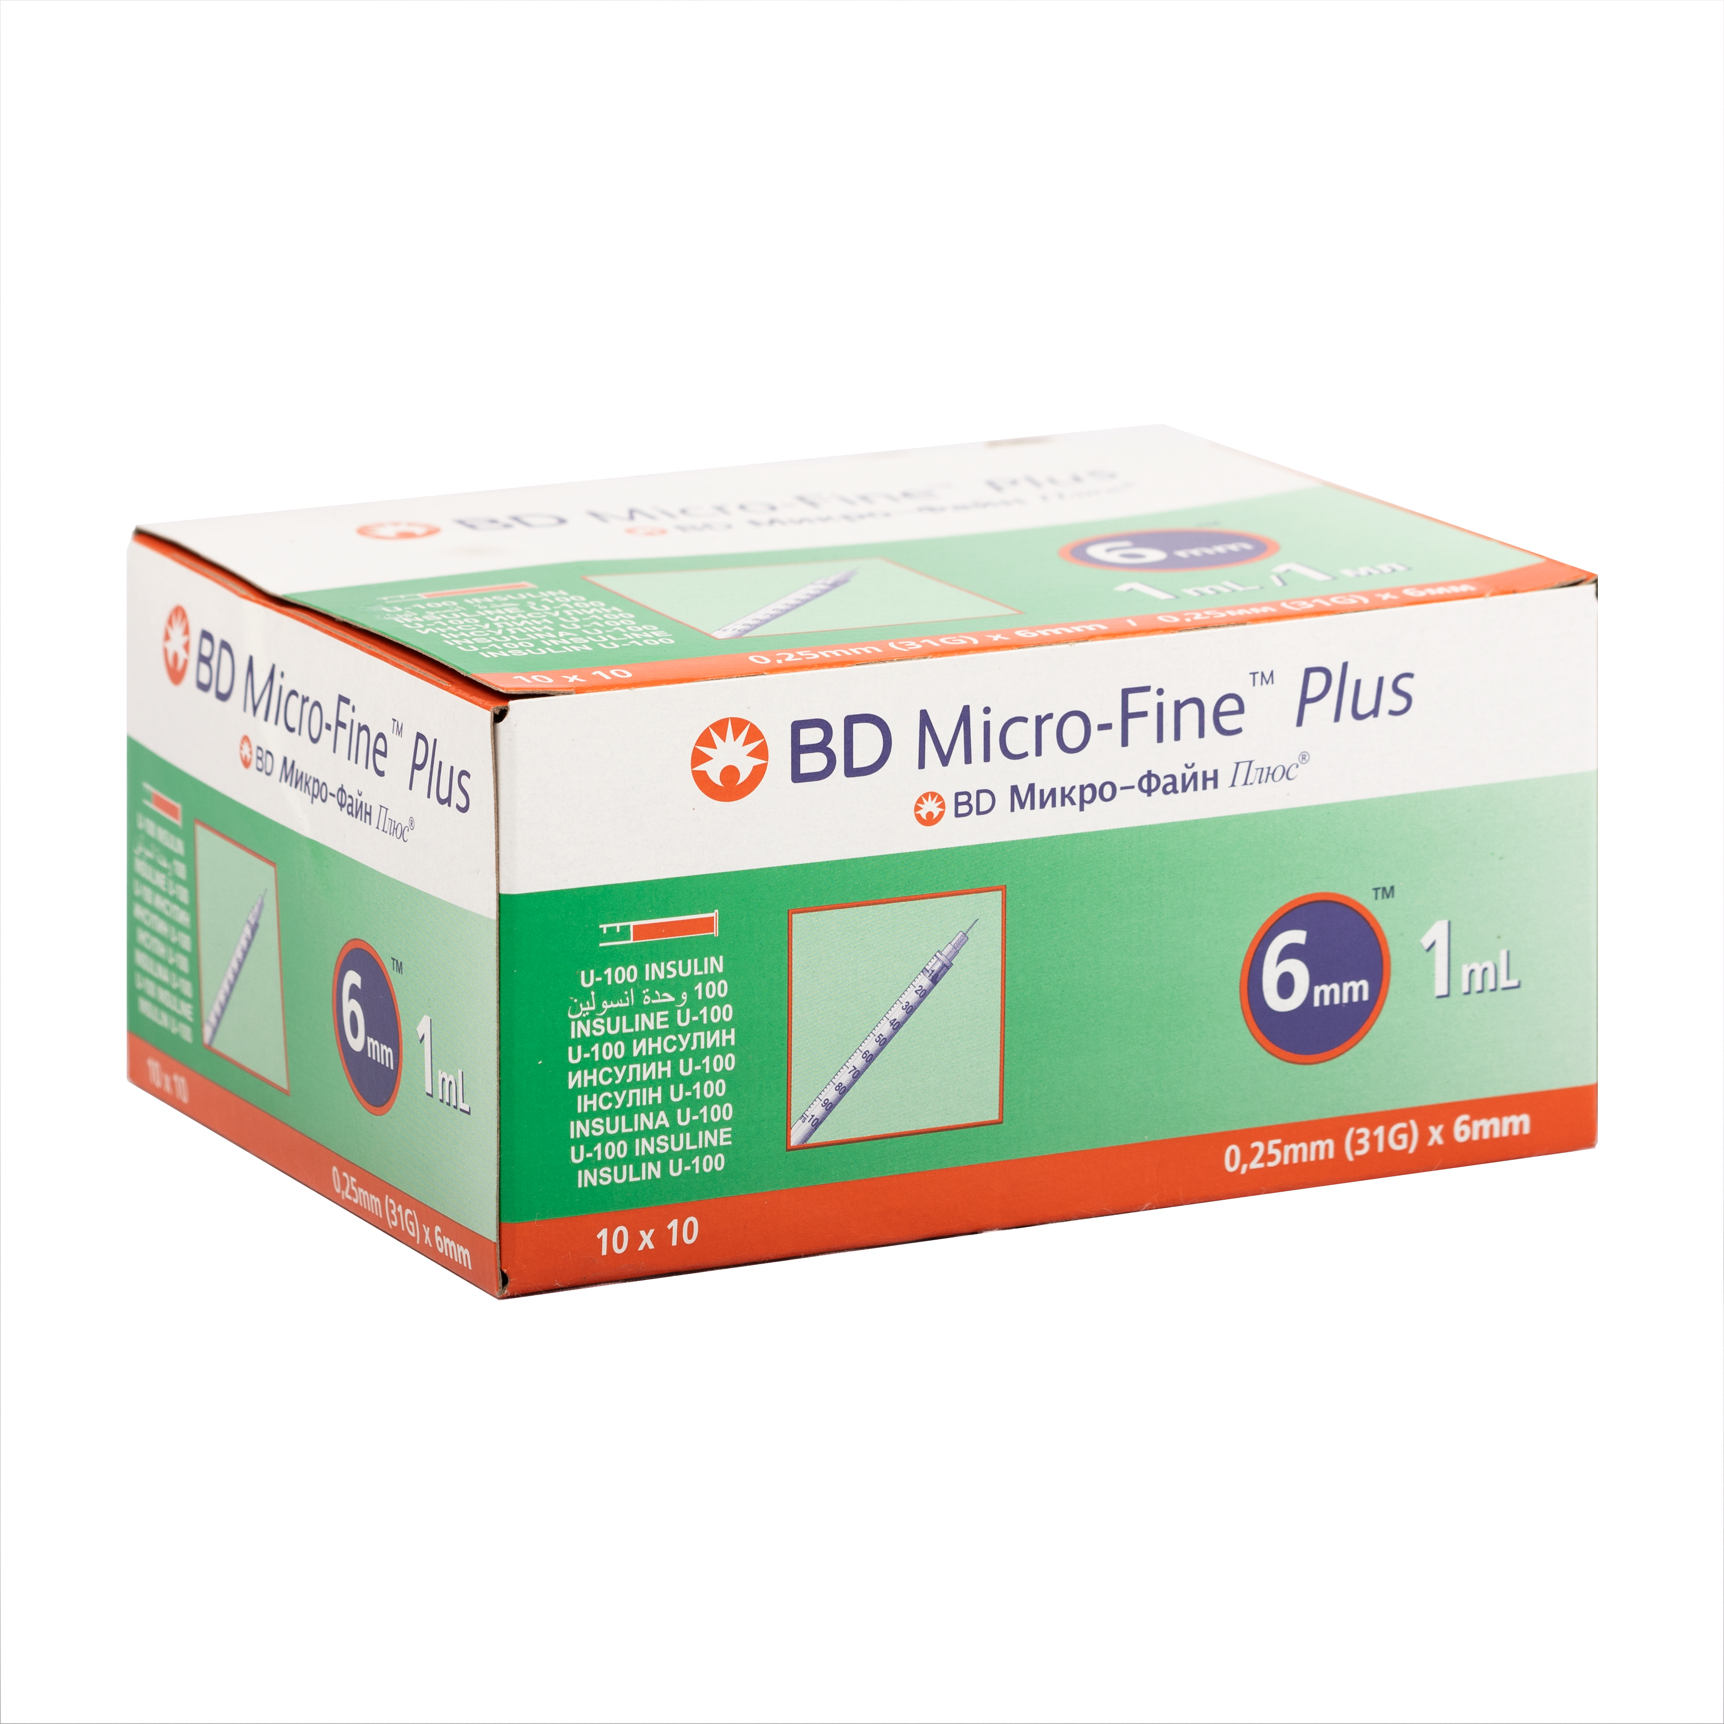 BD Micro-Fine+ Insulin 1 ml Syringe 0.25 mm (31g) x 6 mm 100&#39;s